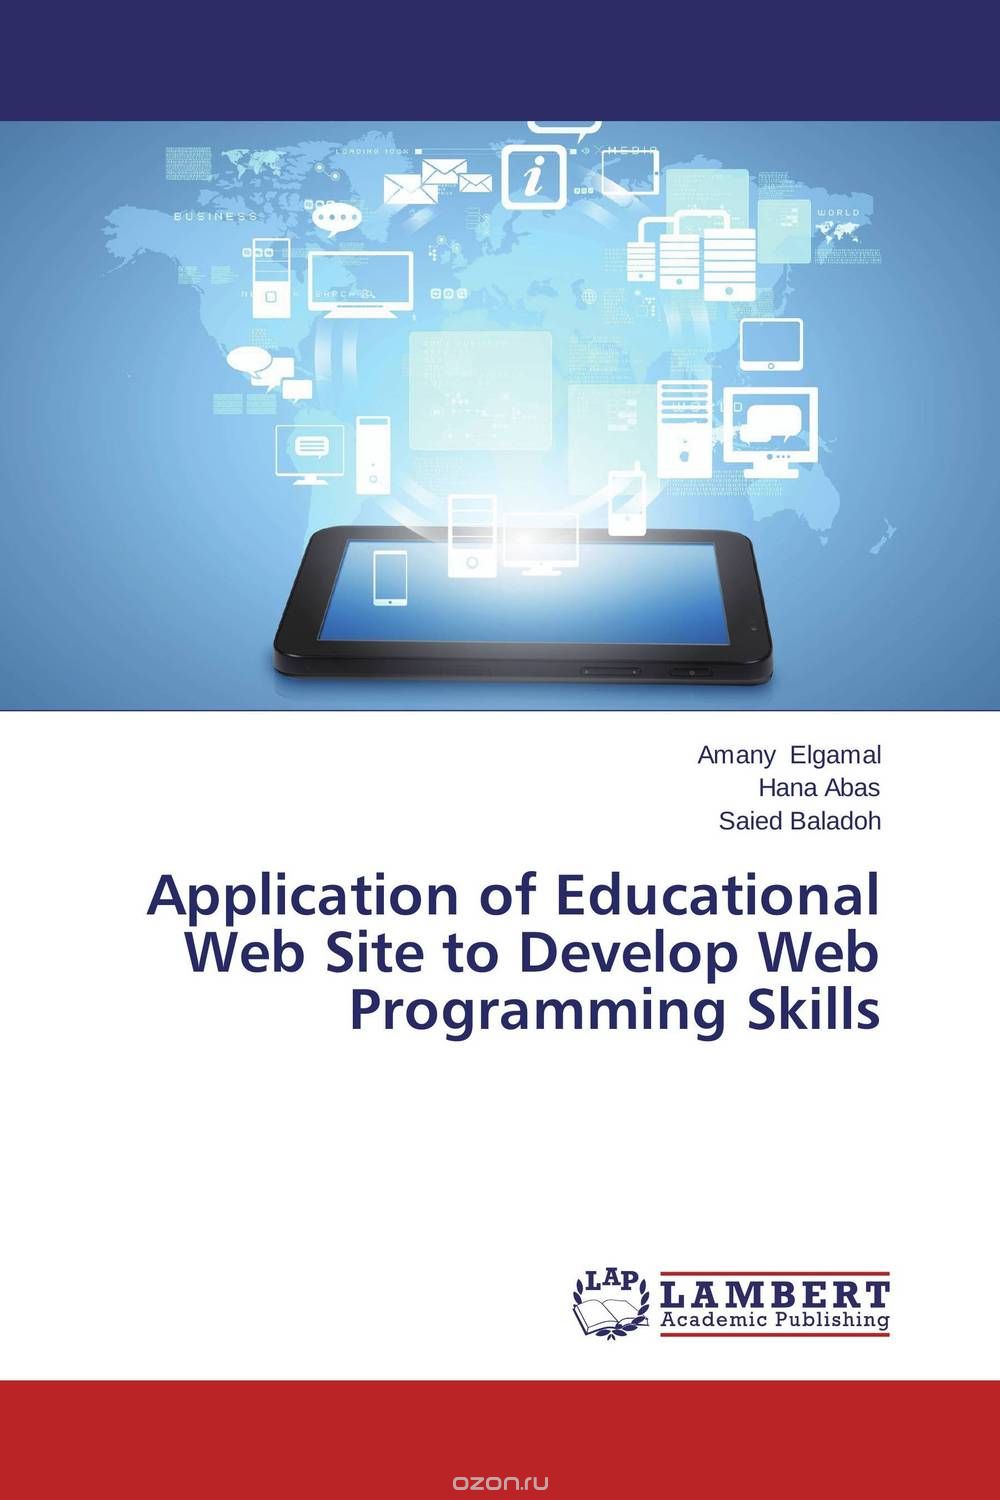 Application of Educational Web Site to Develop Web Programming Skills, Amany Elgamal,Hana Abas and Saied Baladoh